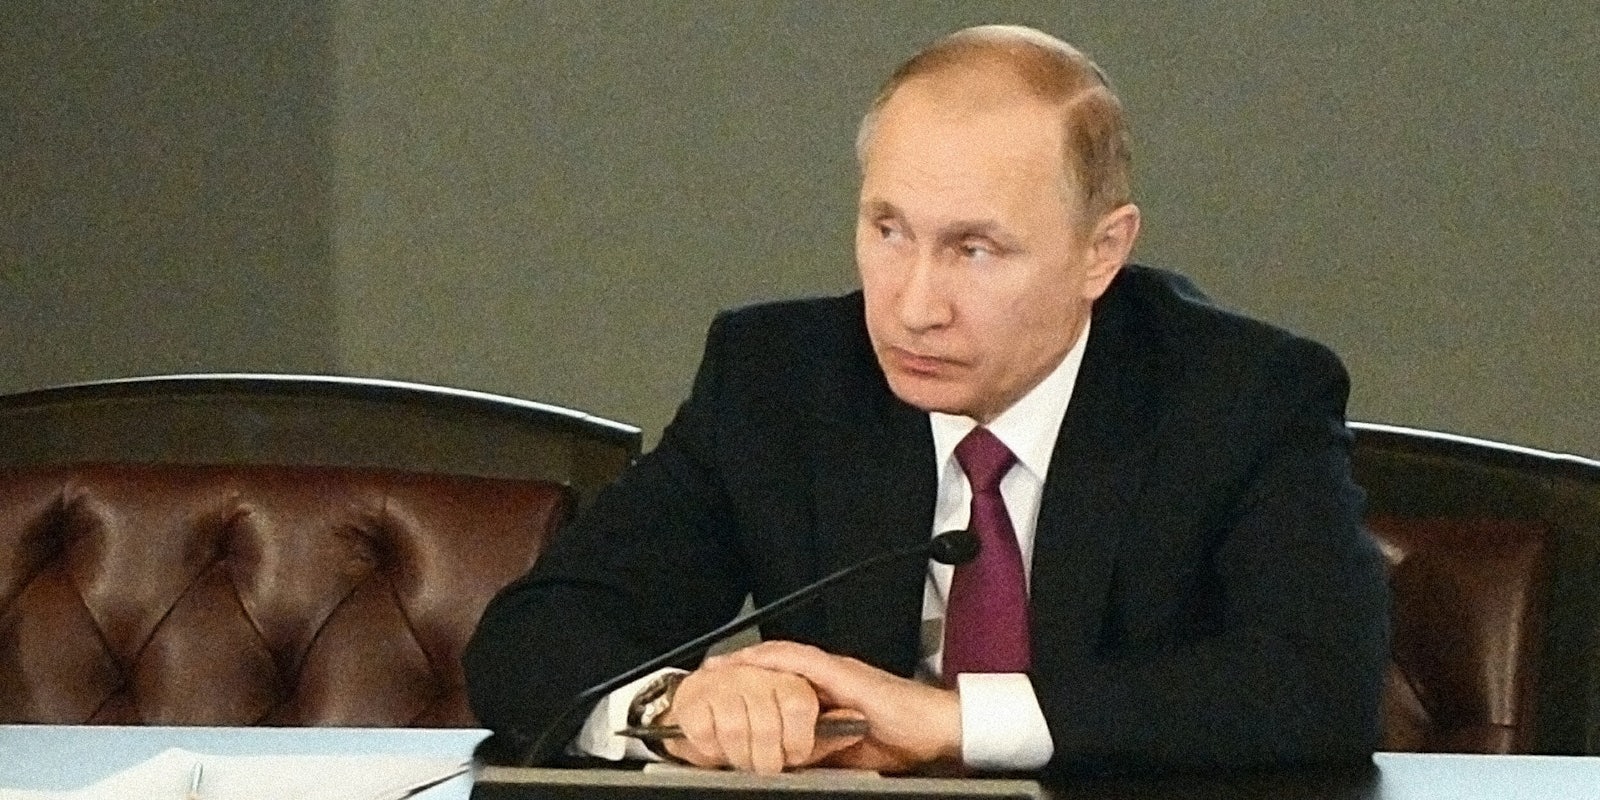 Vladimir Putin sitting at desk